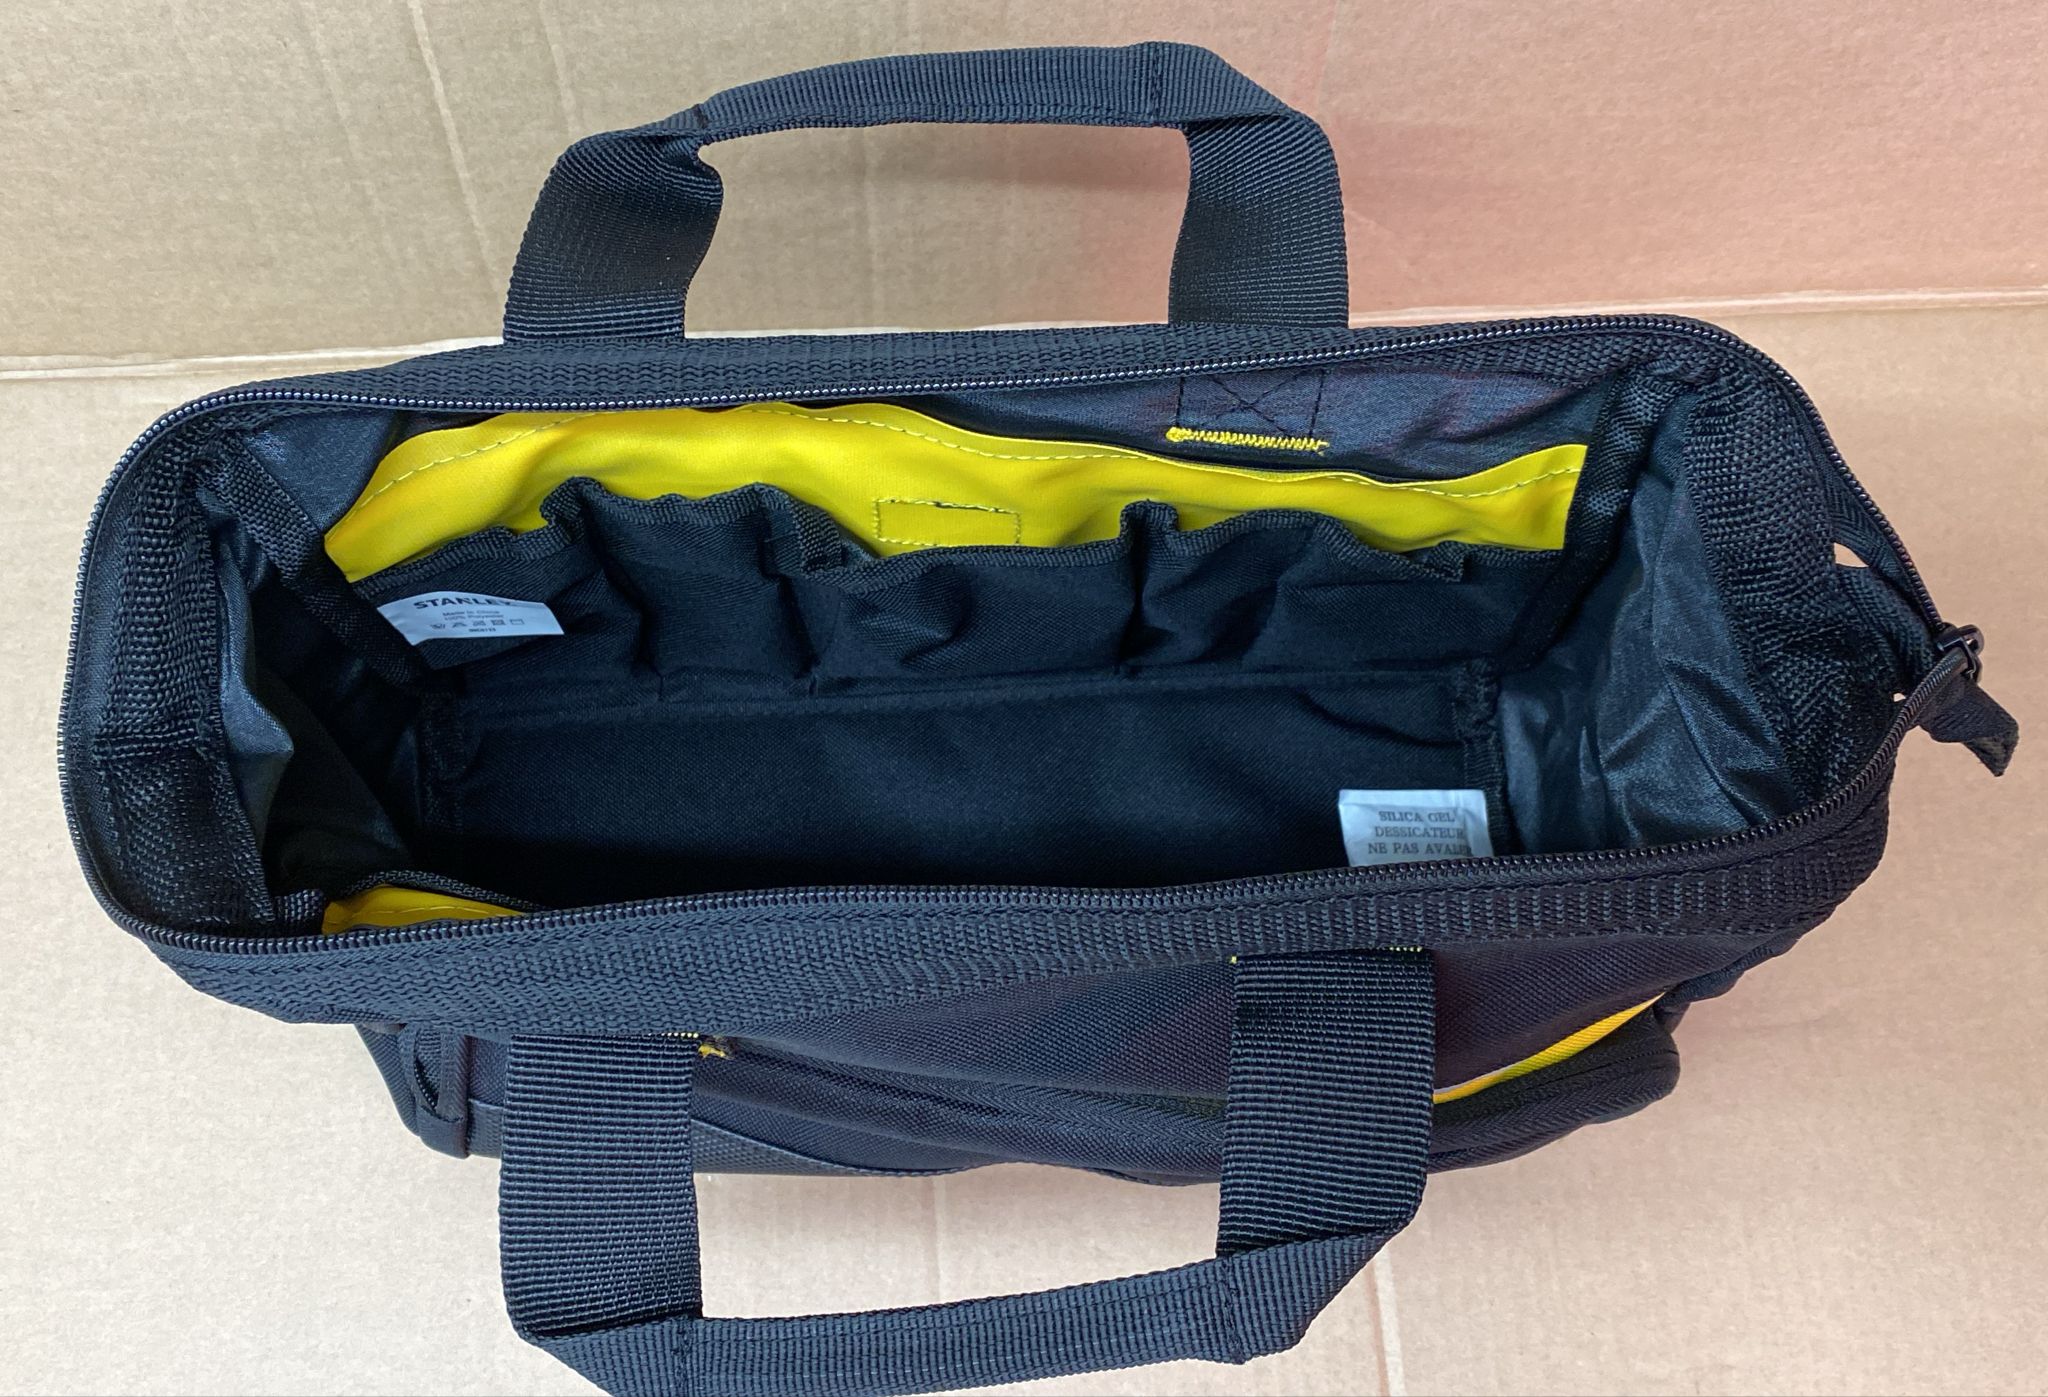 STANLEY Tool Bag 30 x 25 x 13 cm in Resistant 600 x 600 Denier 3301